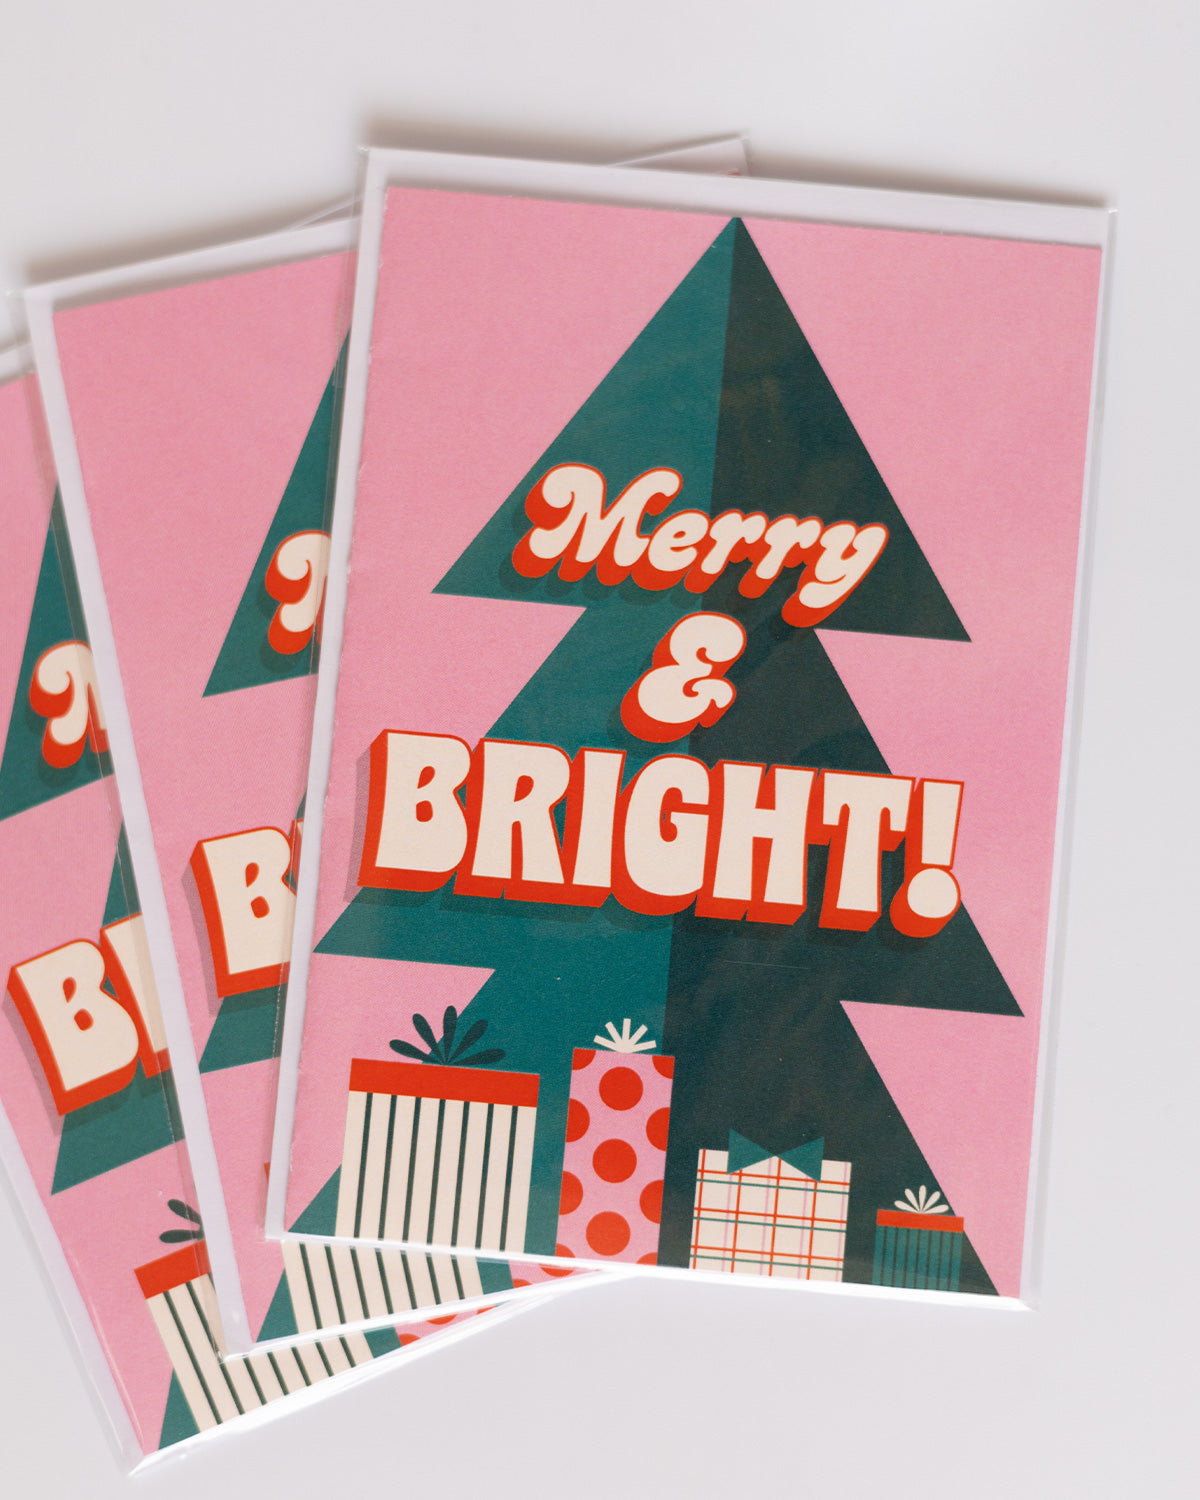 Merry-_-Bright-2.jpg